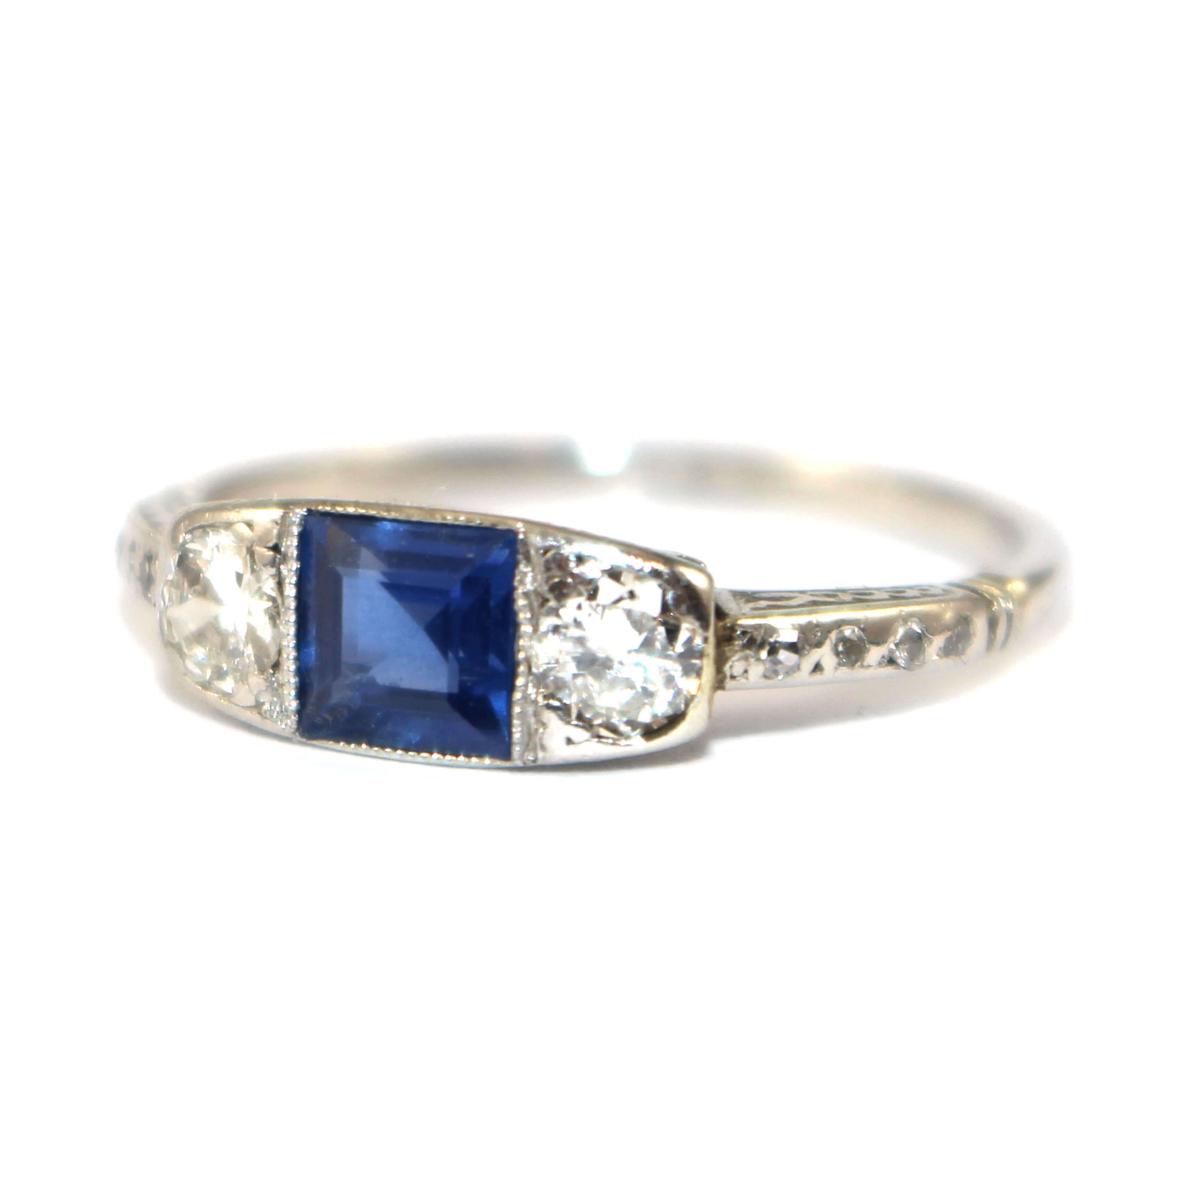 Art Deco Sapphire & Diamond 3 Stone Ring c.1930